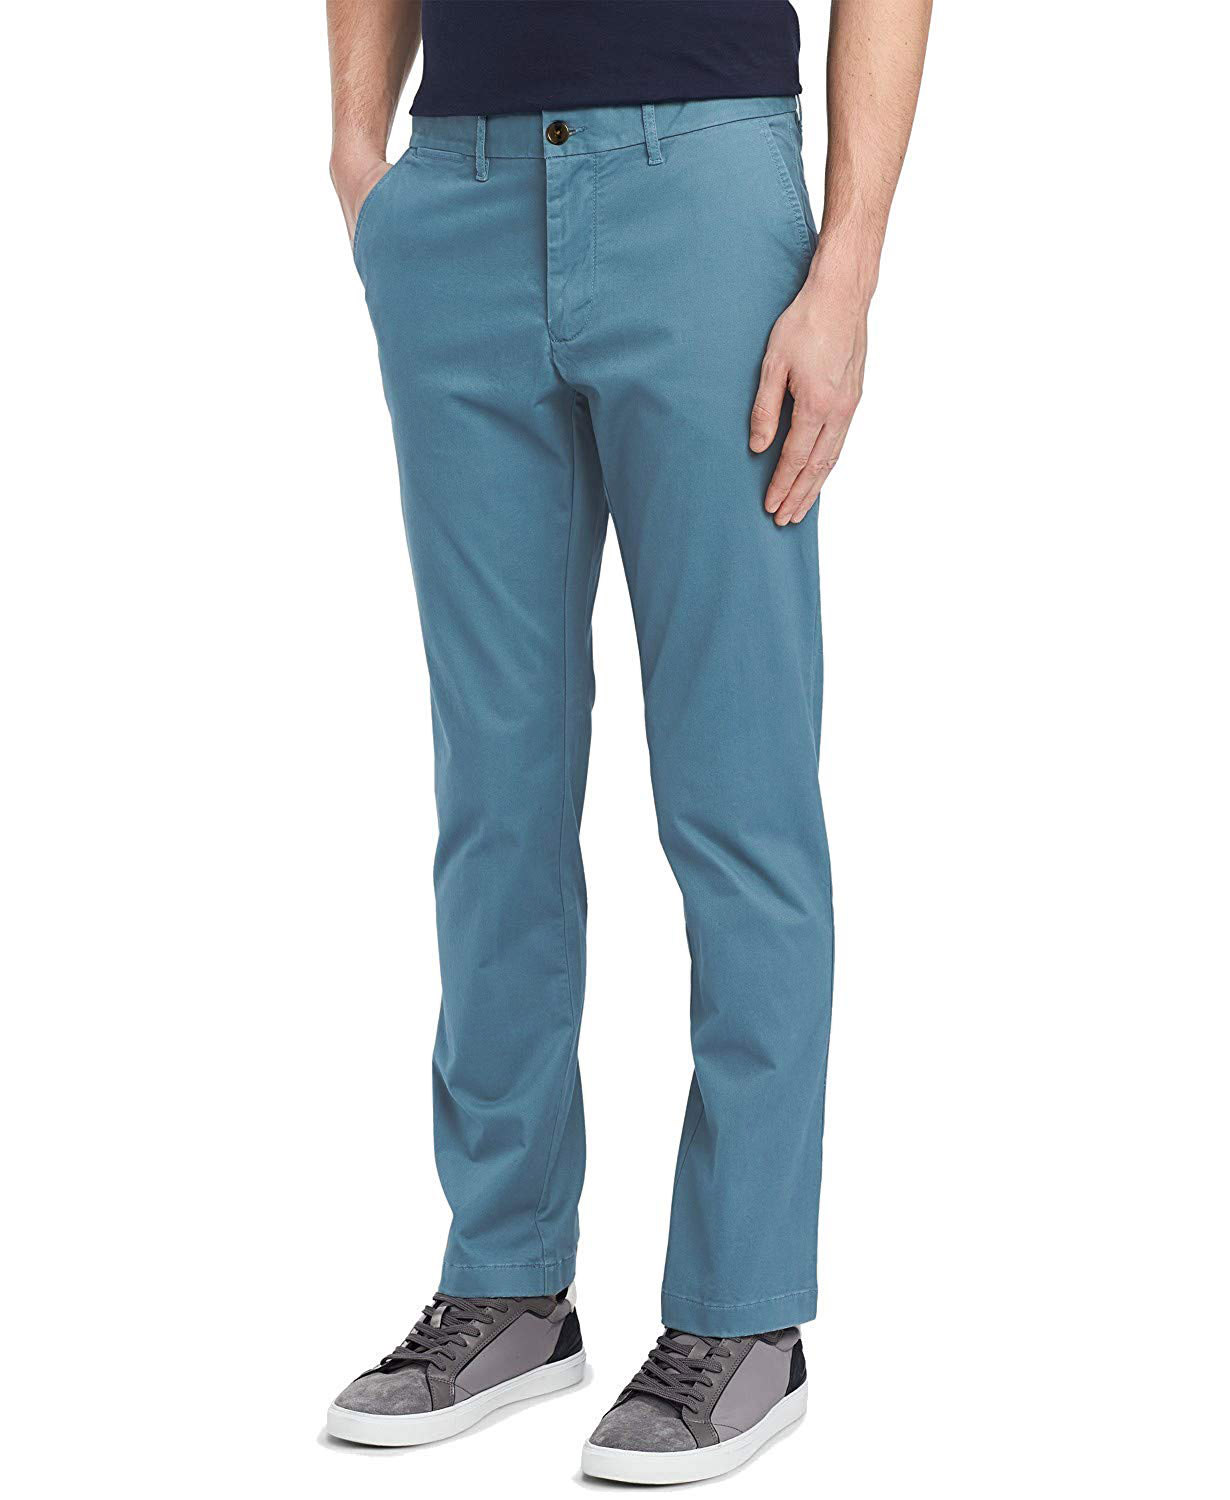 Veeg worst musical Tommy Hilfiger Men's Stretch Slim-Fit Chino Pants (China Blue, 31x30) -  Walmart.com